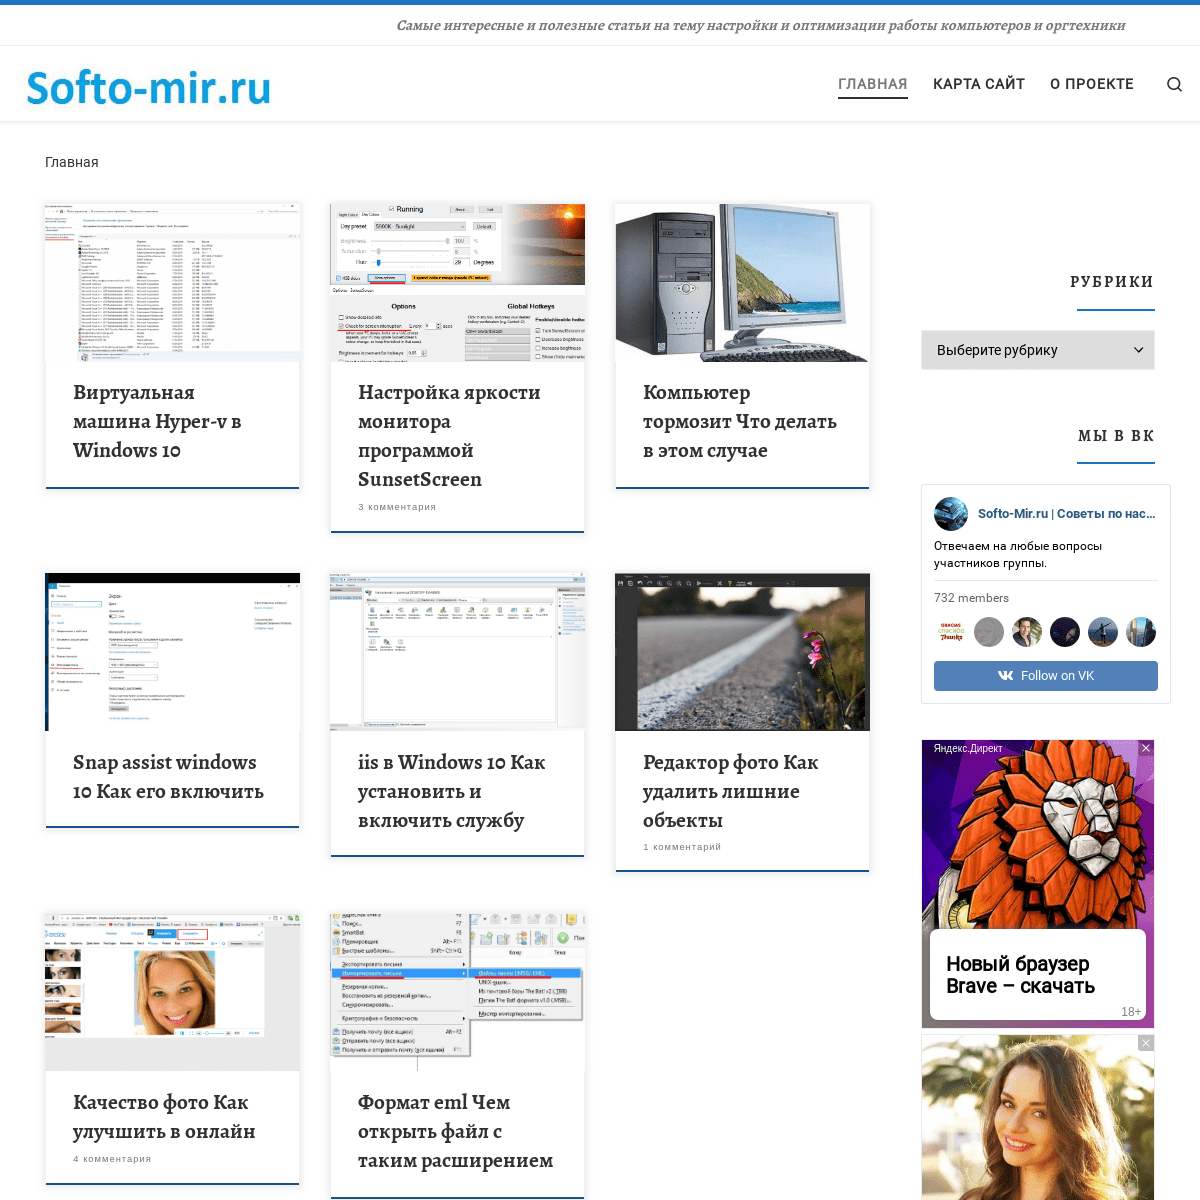 A complete backup of softo-mir.ru